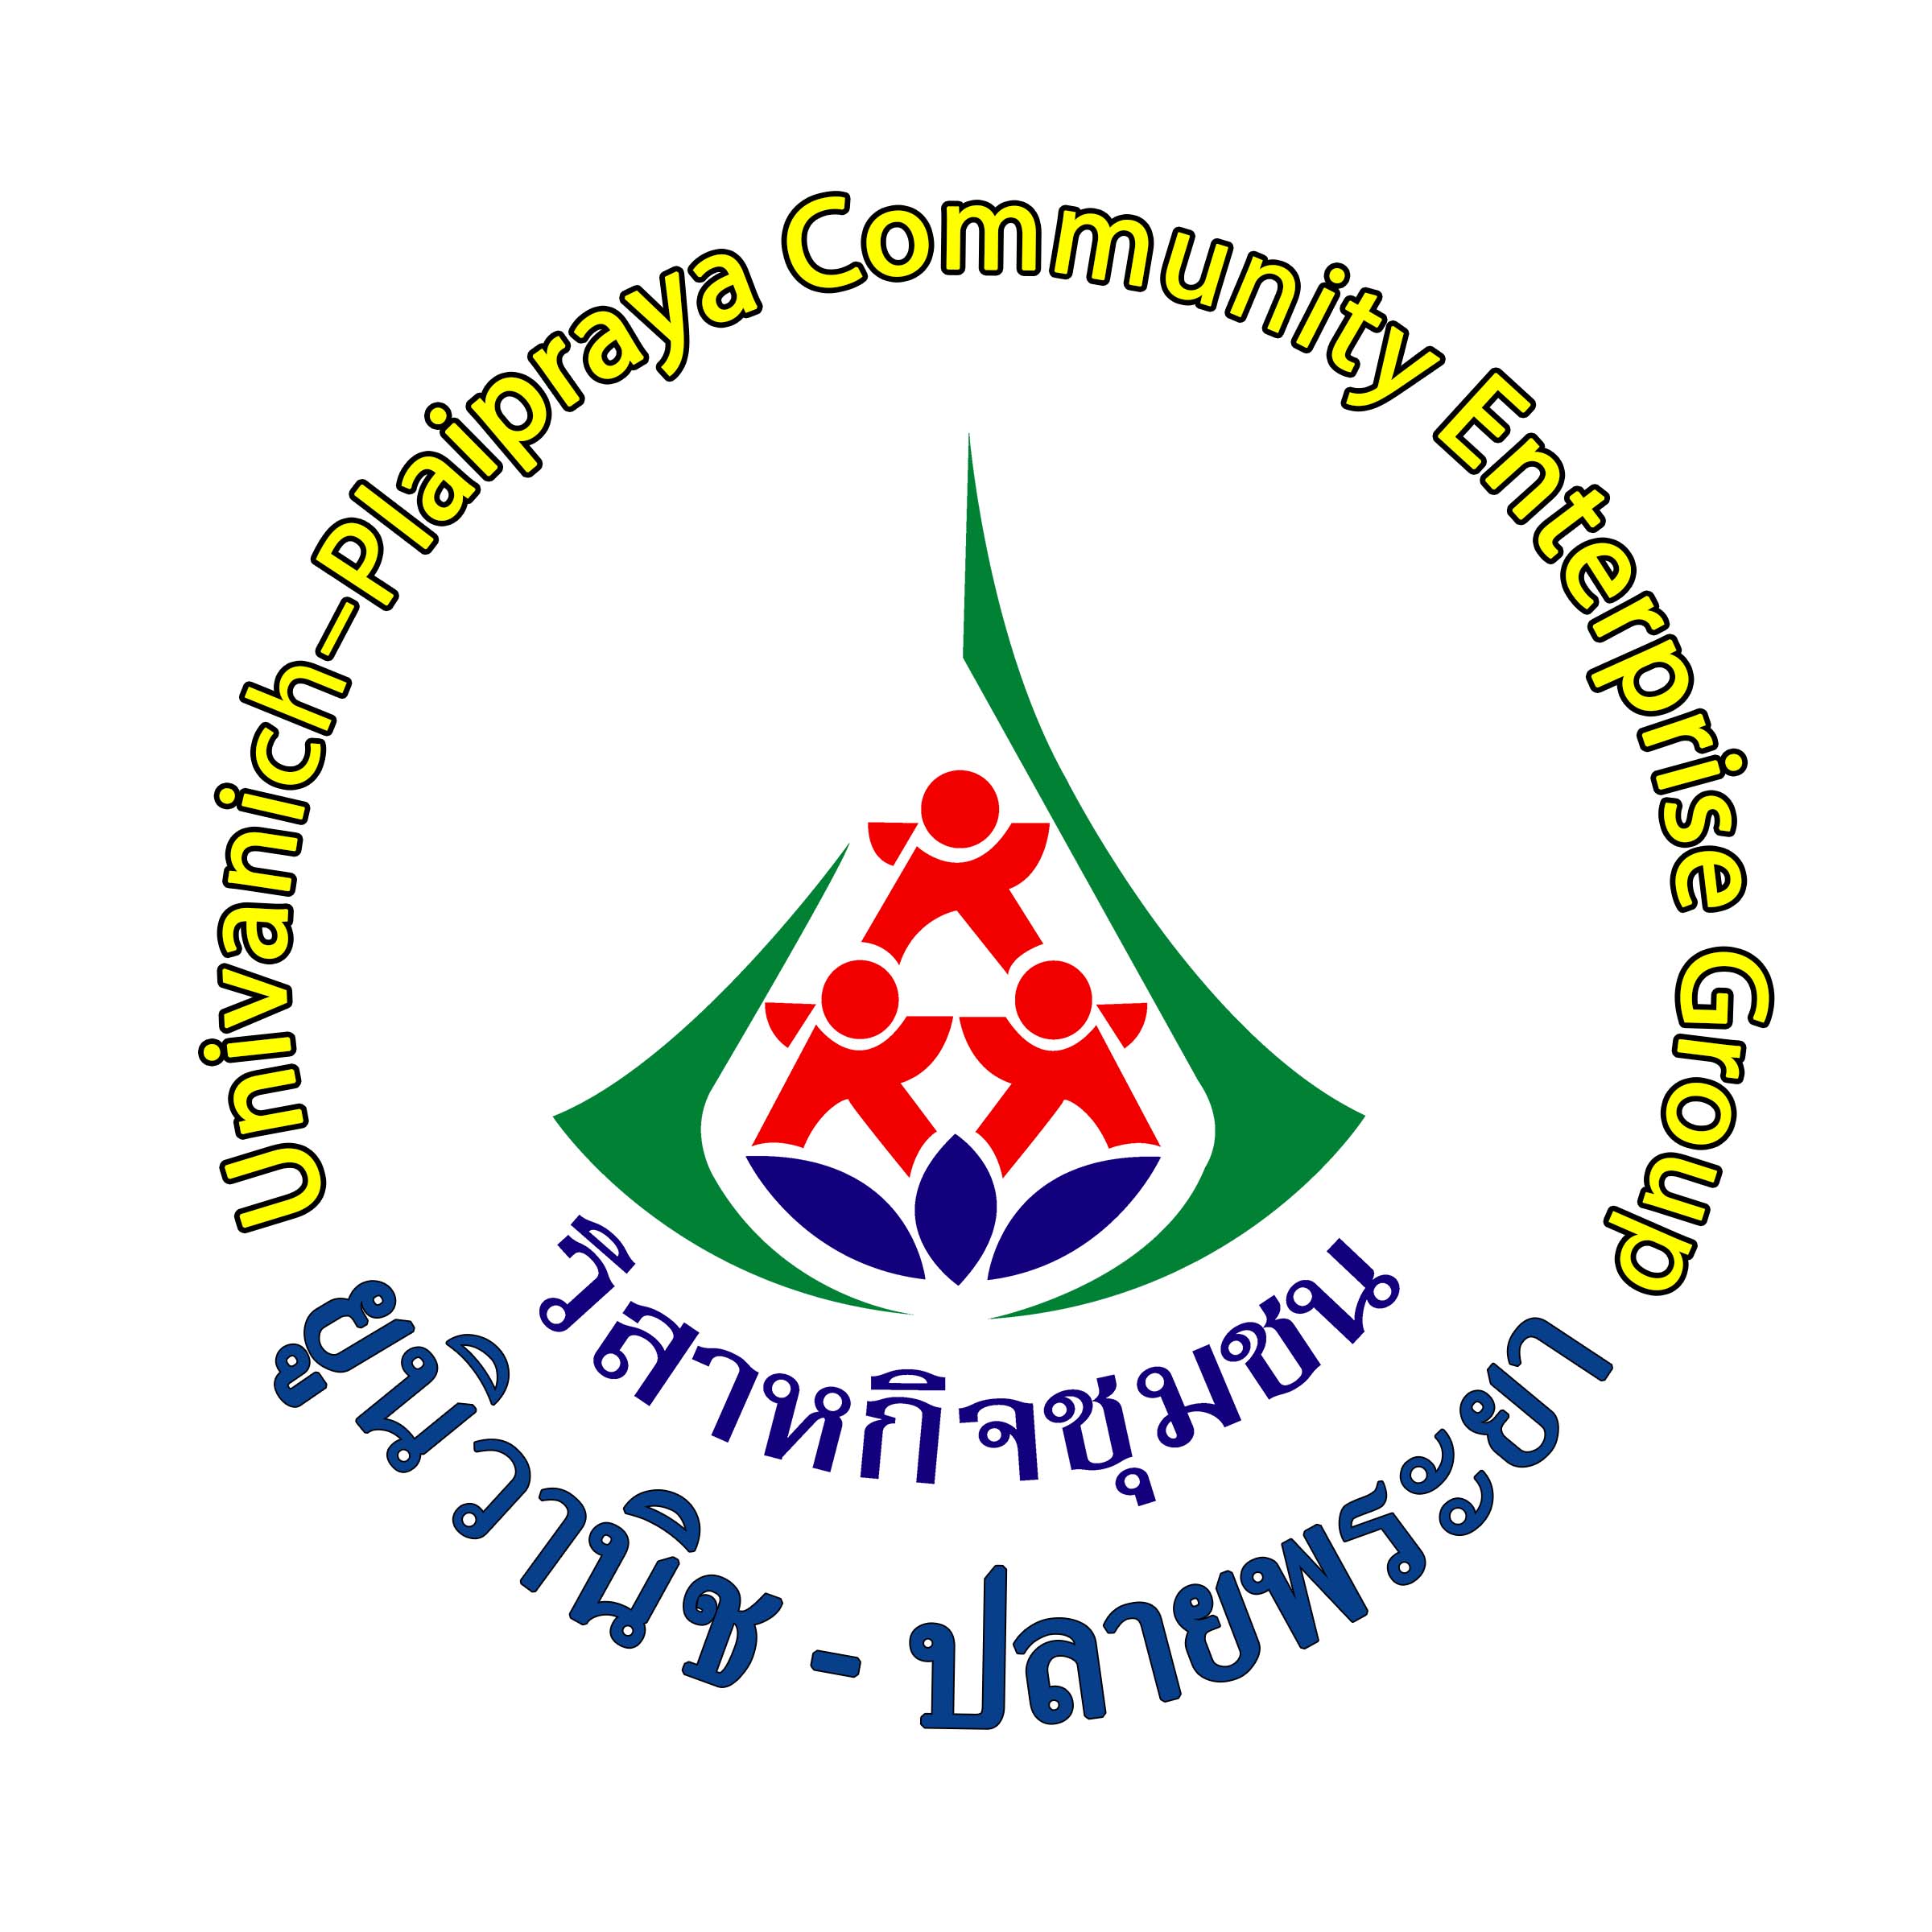 Univanich-Playpraya Community Enterprise Group